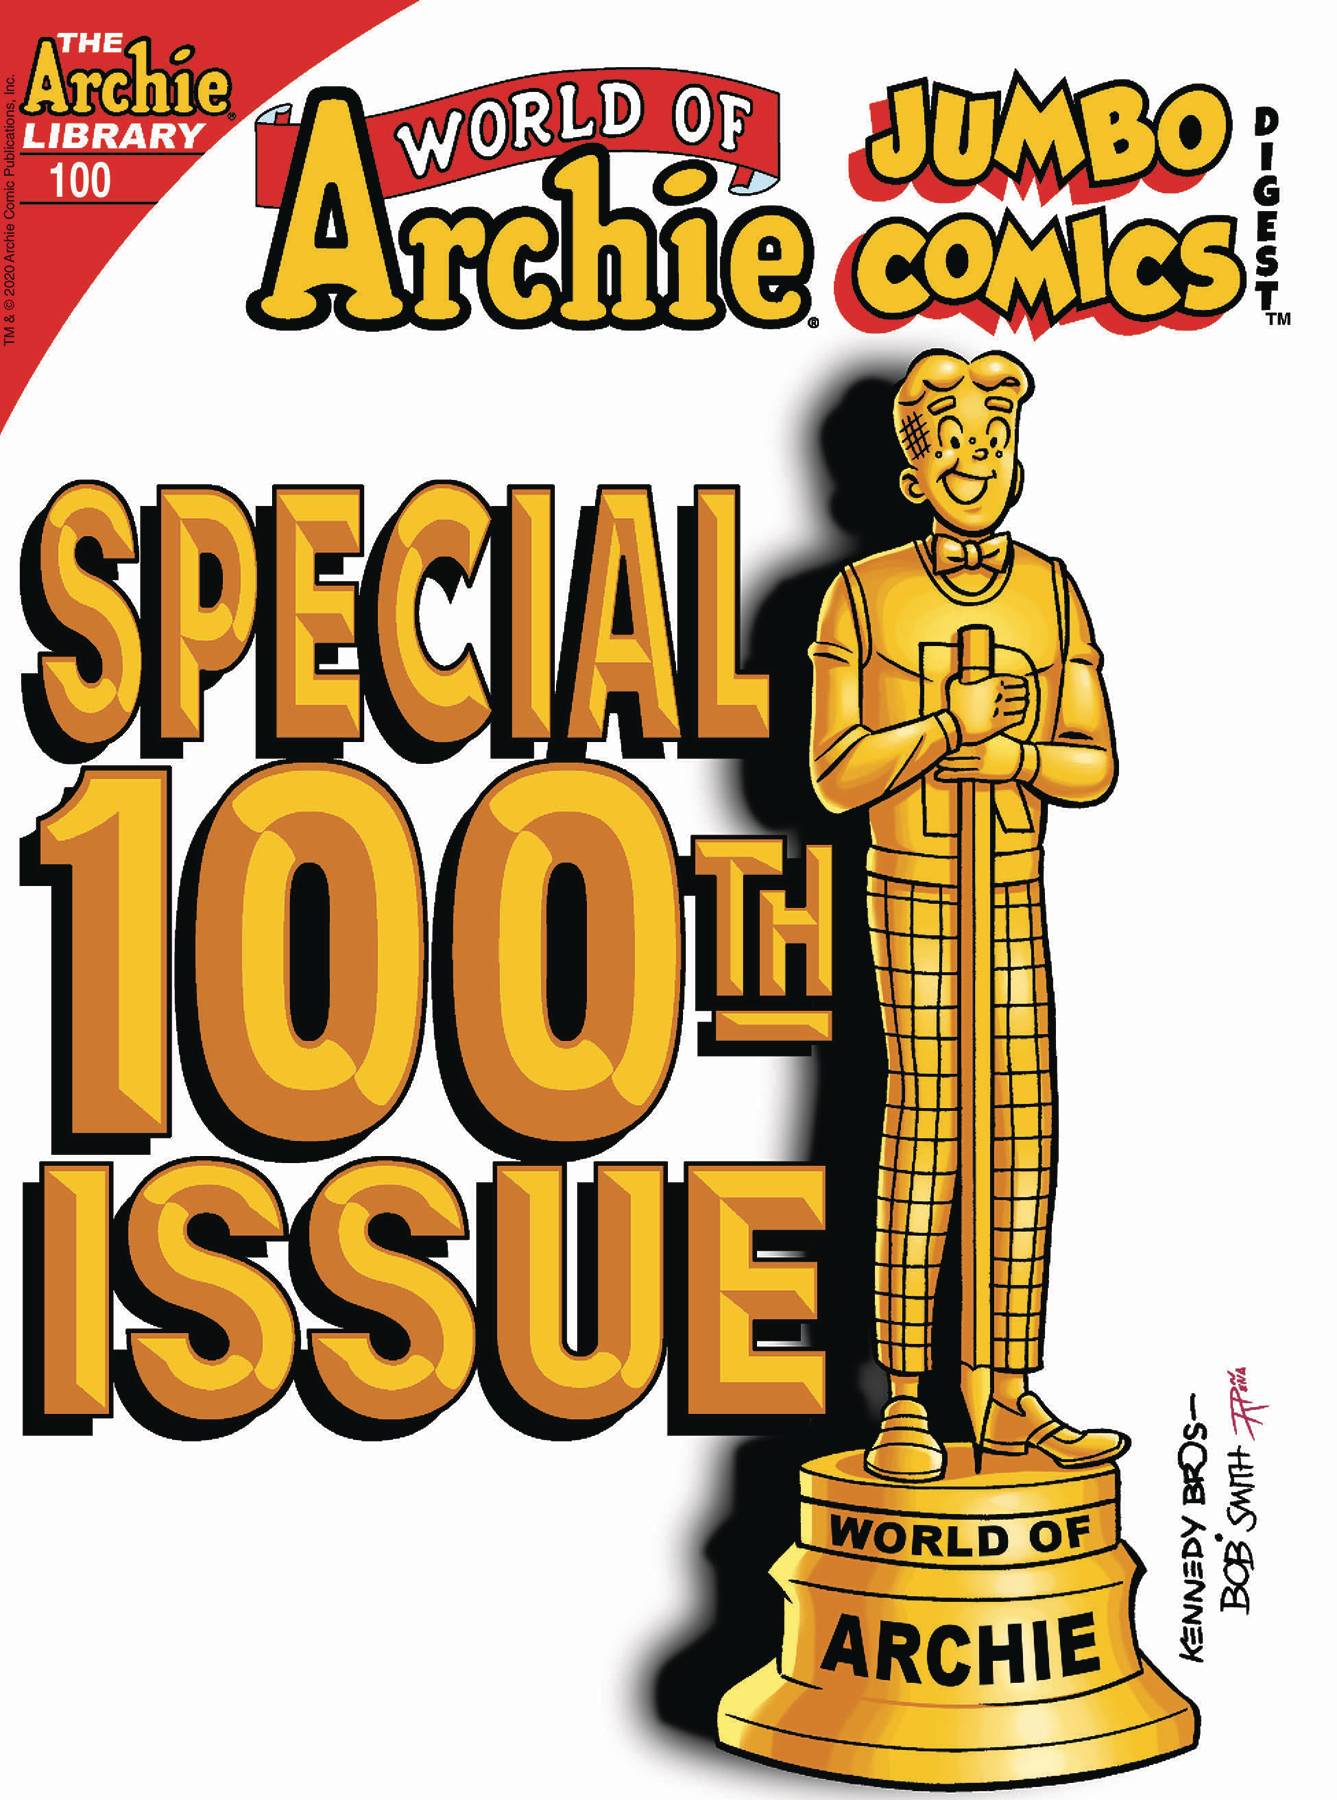 WORLD OF ARCHIE JUMBO COMICS DIGEST #100